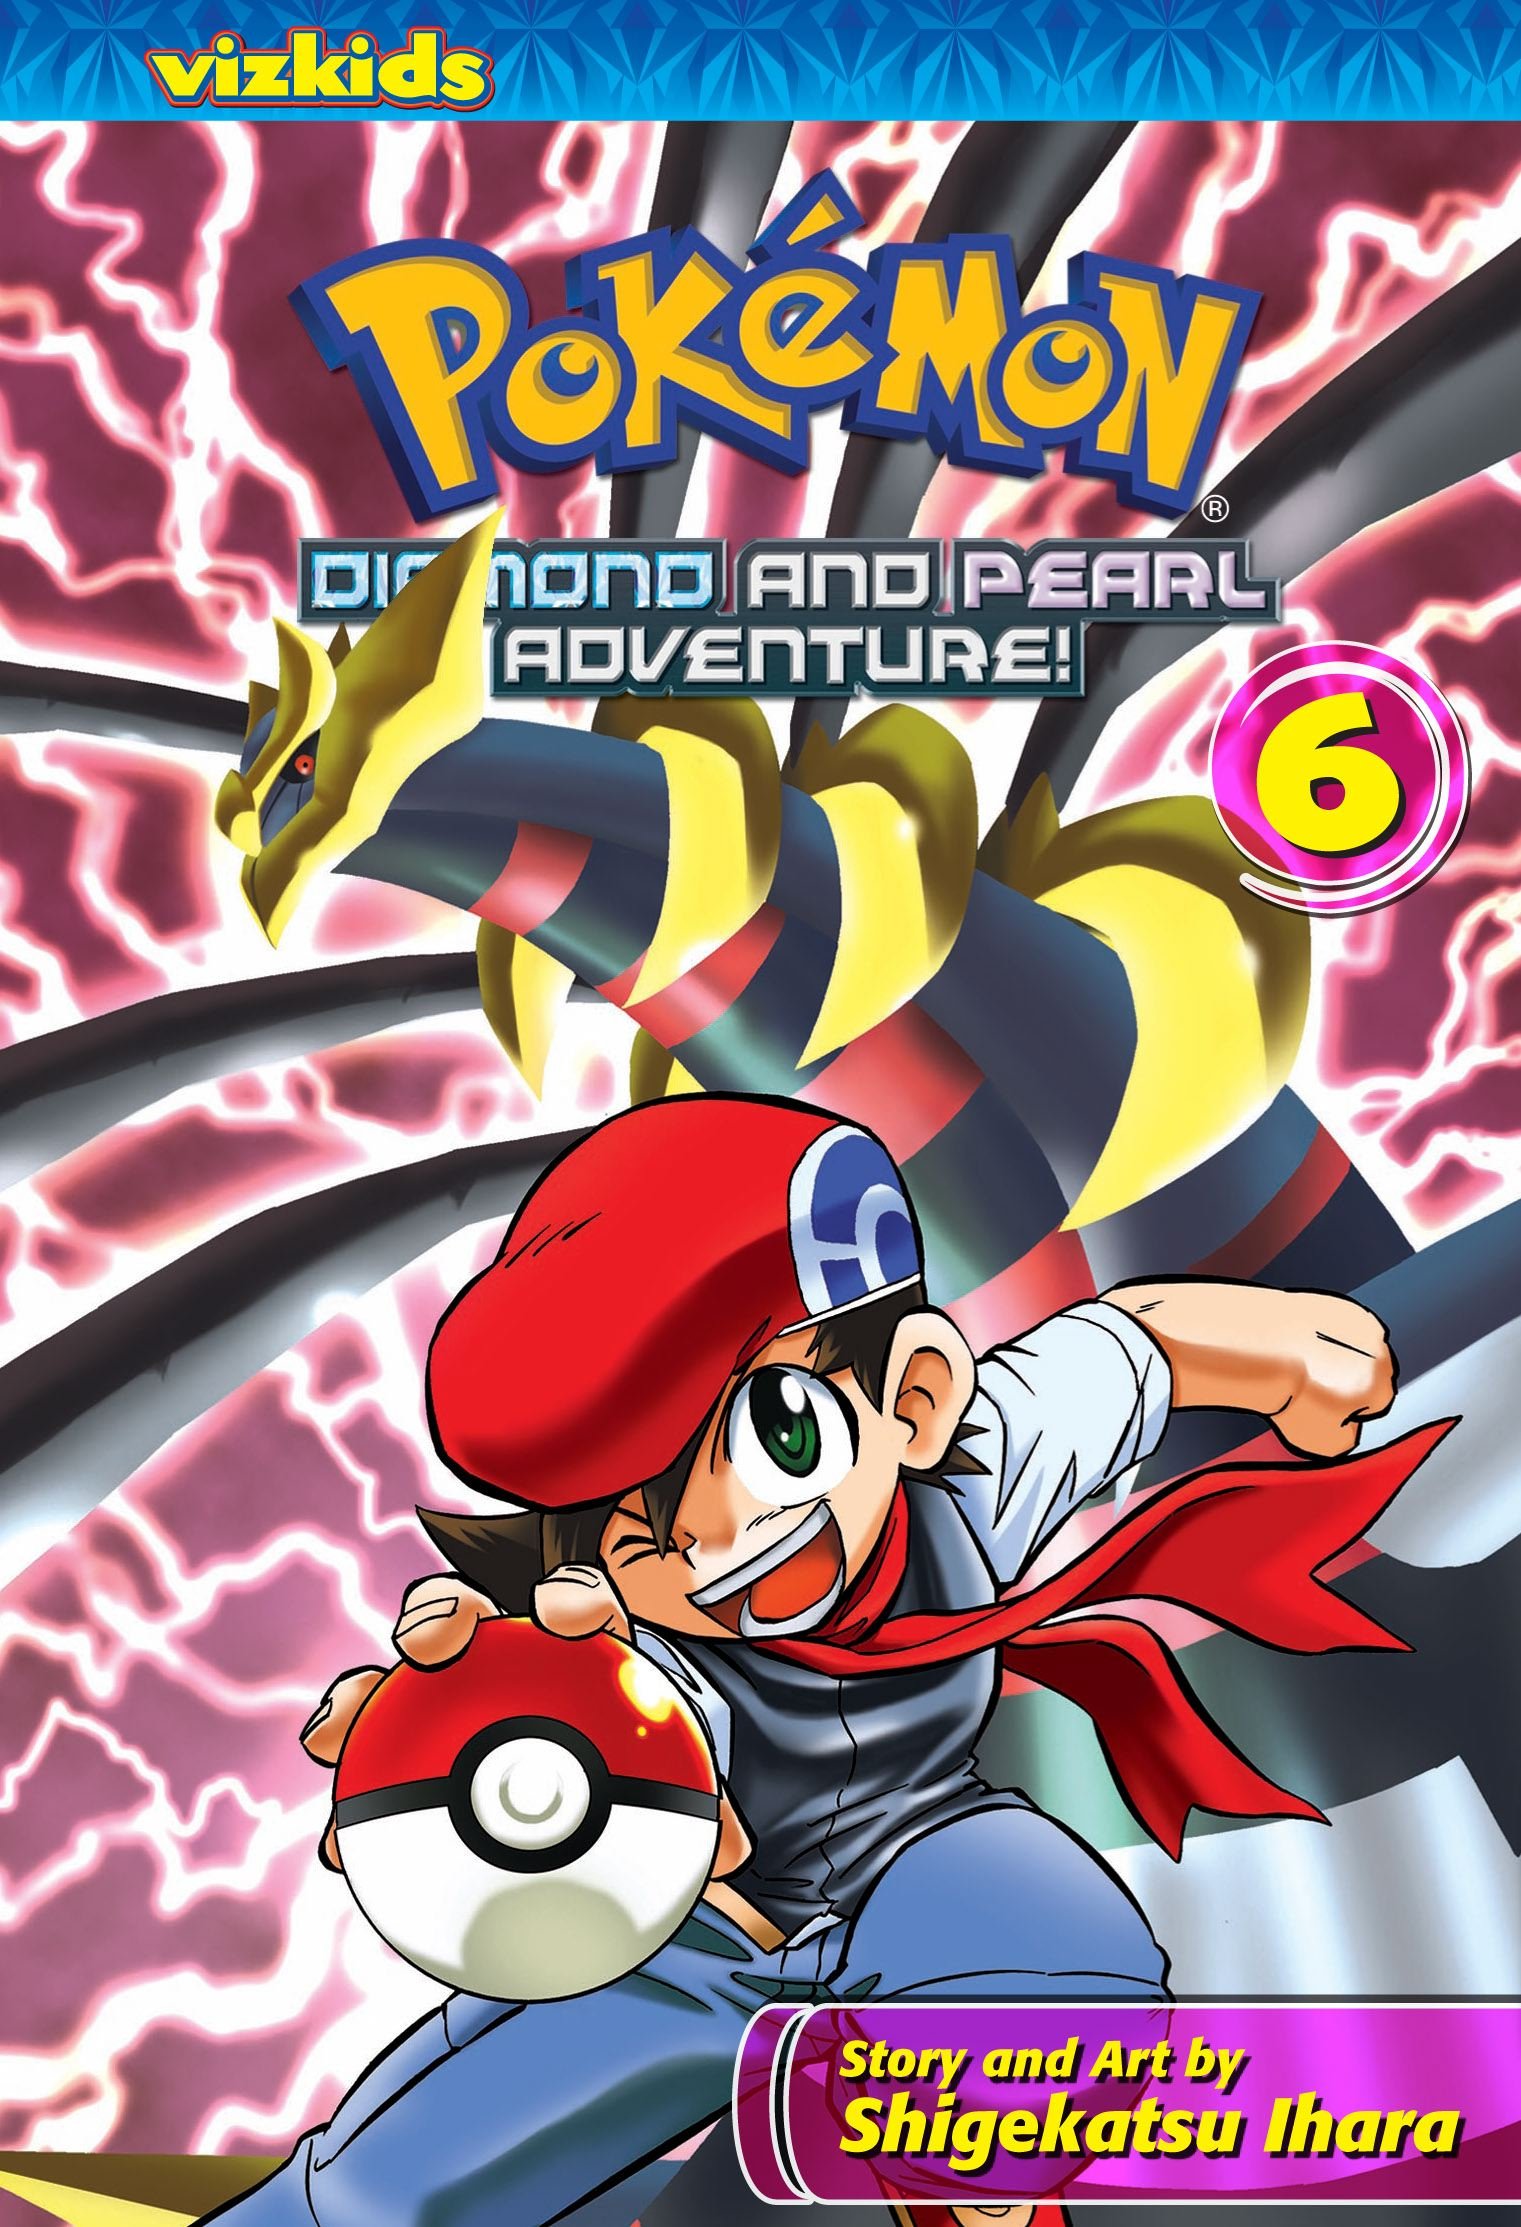 Pokemon Diamond and Pearl Adventure! - Volume 6